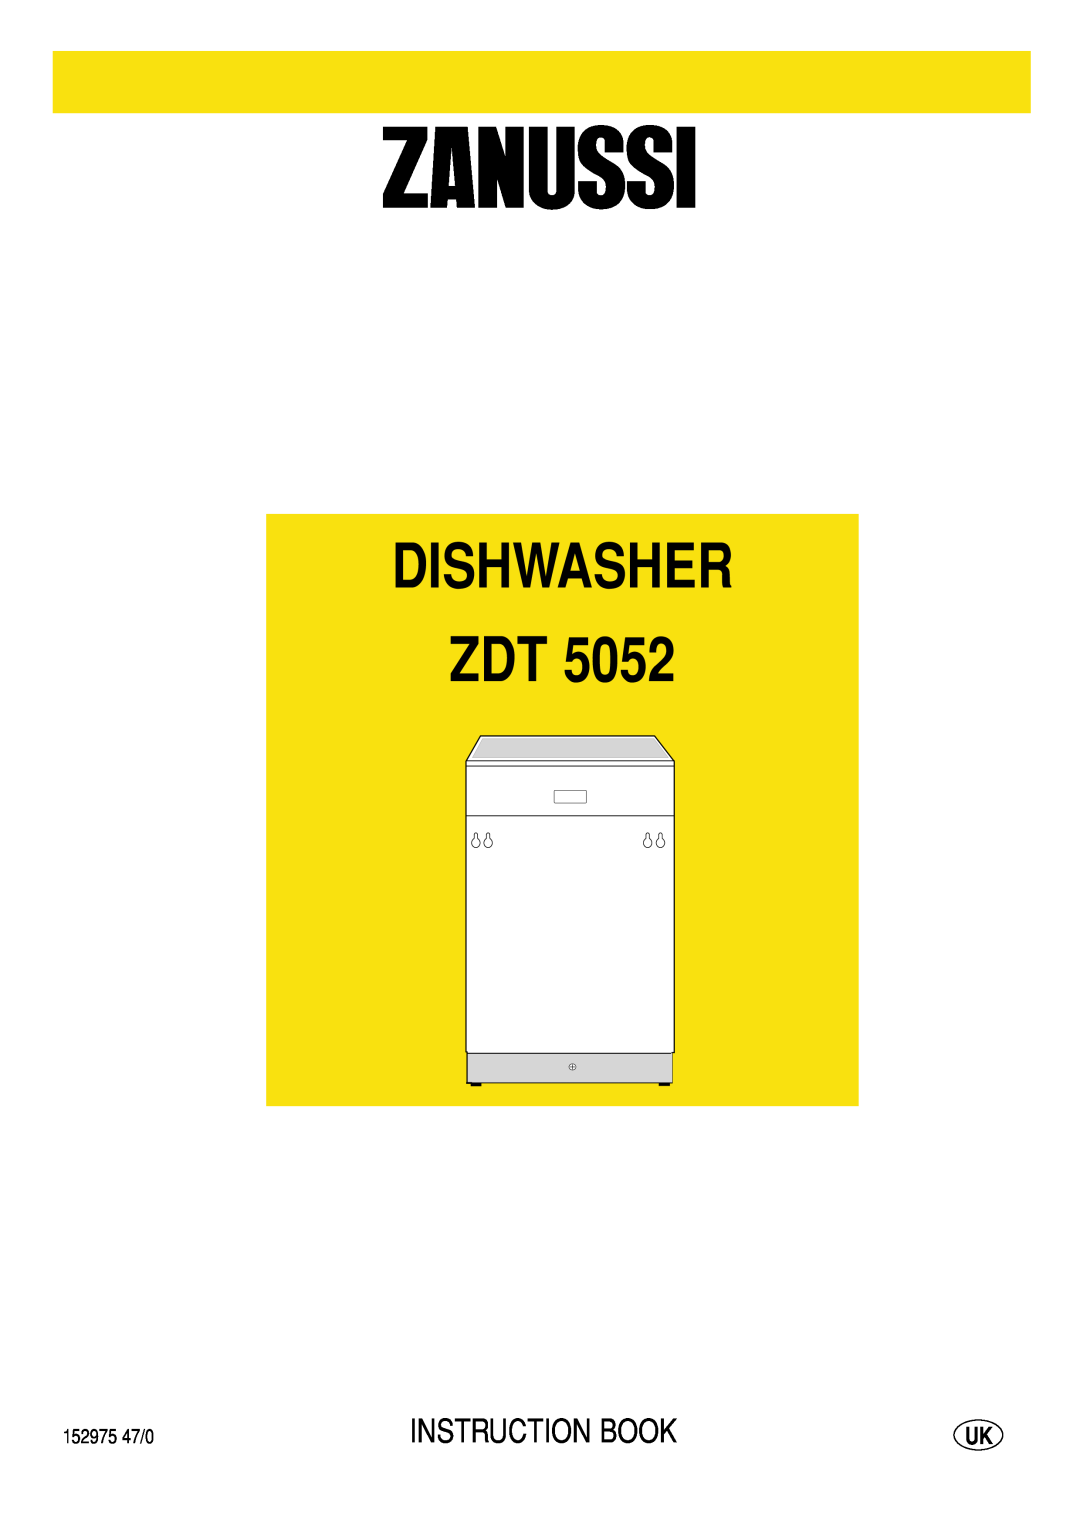 Zanussi ZDT 5052 manual Dishwasher, Instruction Book 